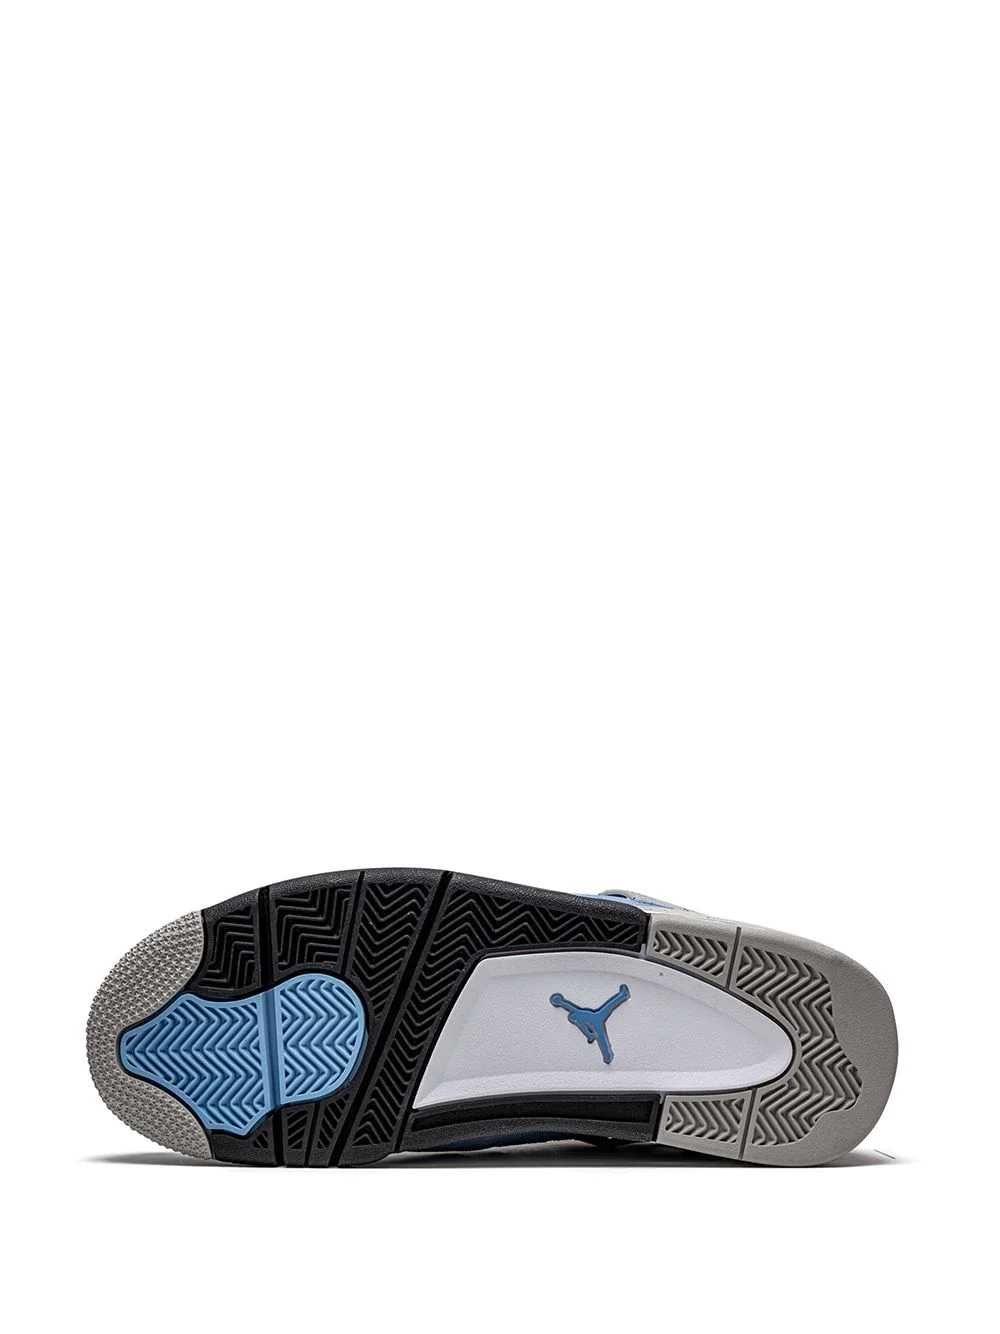 Air Jordan 4 Retro sneakers university blue